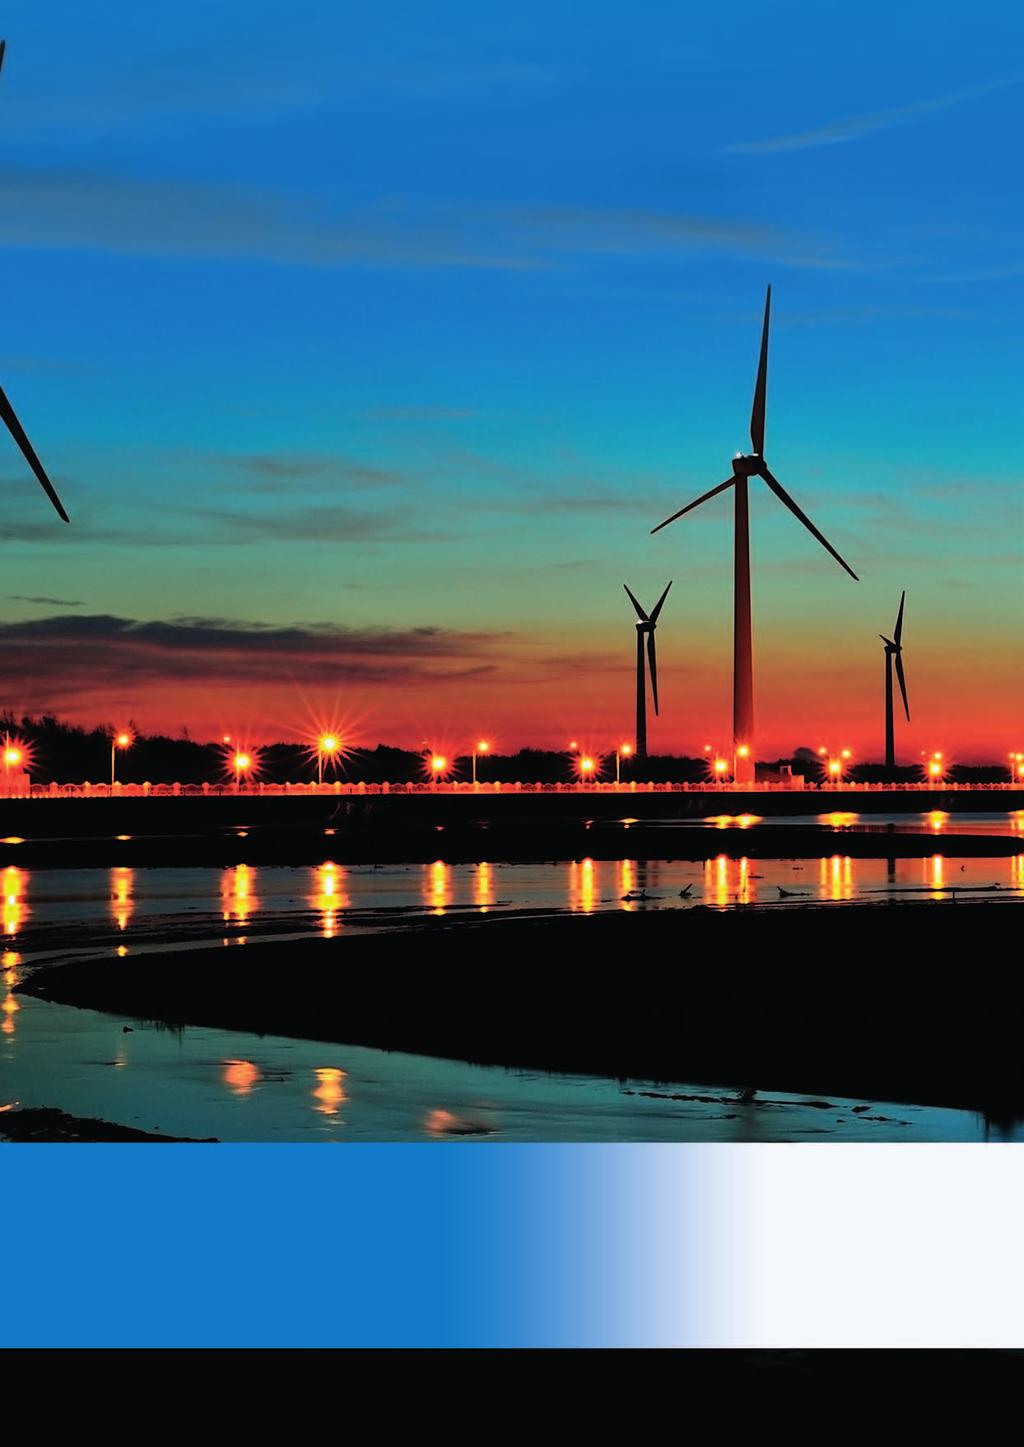 wind turbine automotive SMT locations - worldwide UNITED KINGDOM Smart Manufacturing Technology Limited